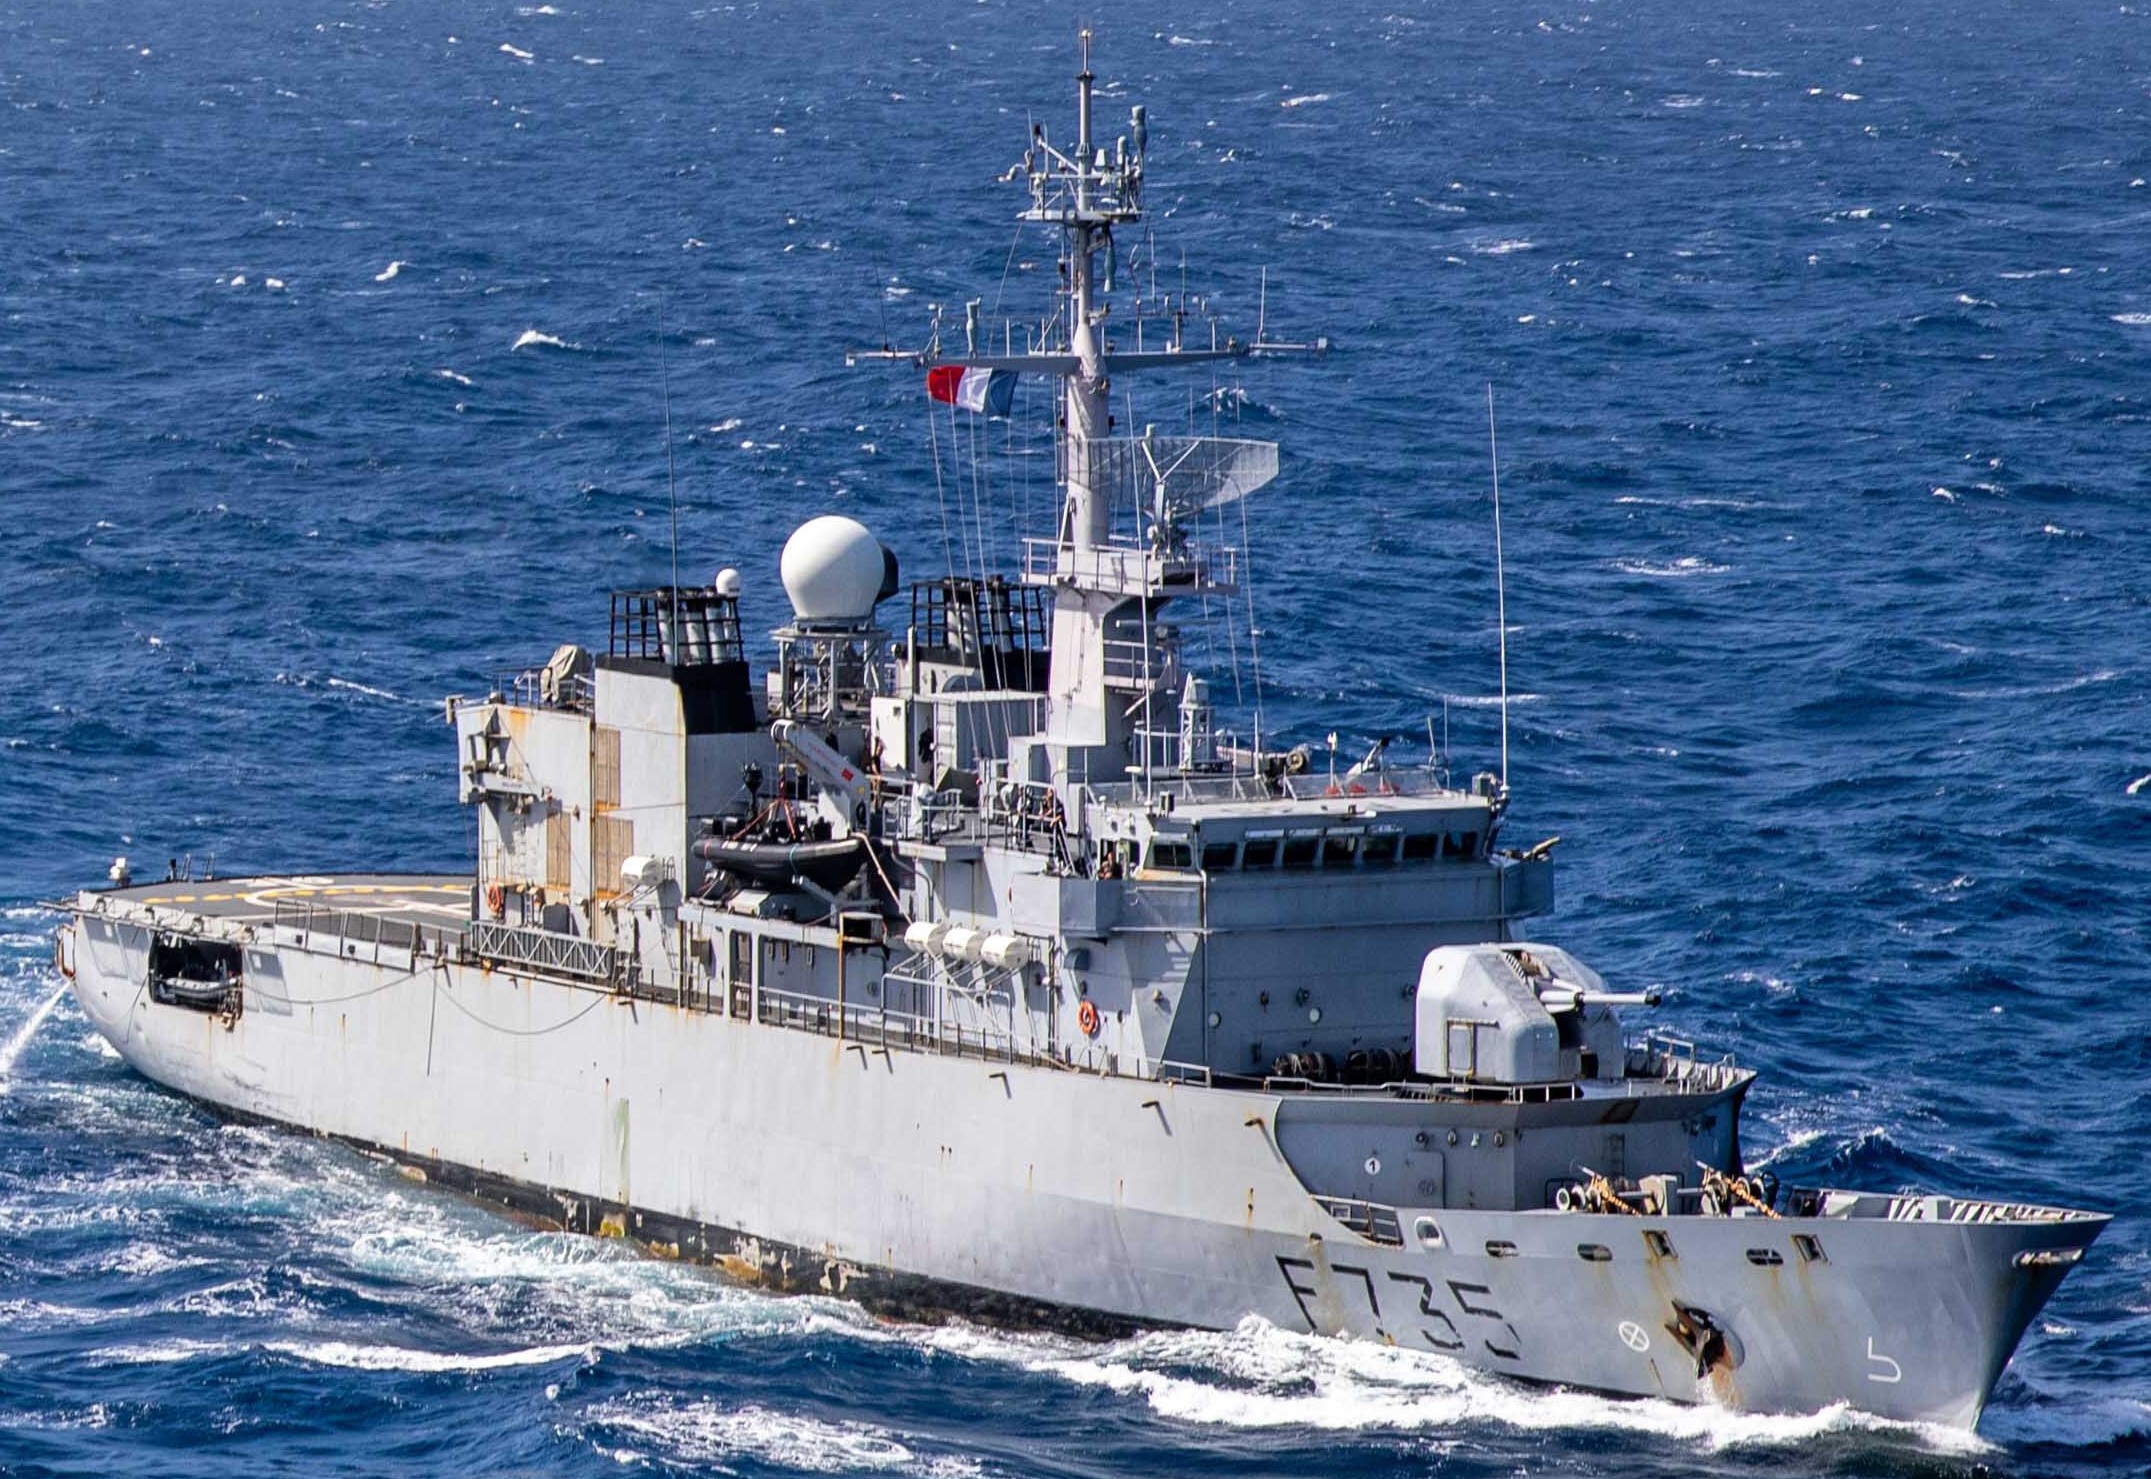 f-735 fs germinal floreal class frigate french navy marine nationale fregate de surveillance 20